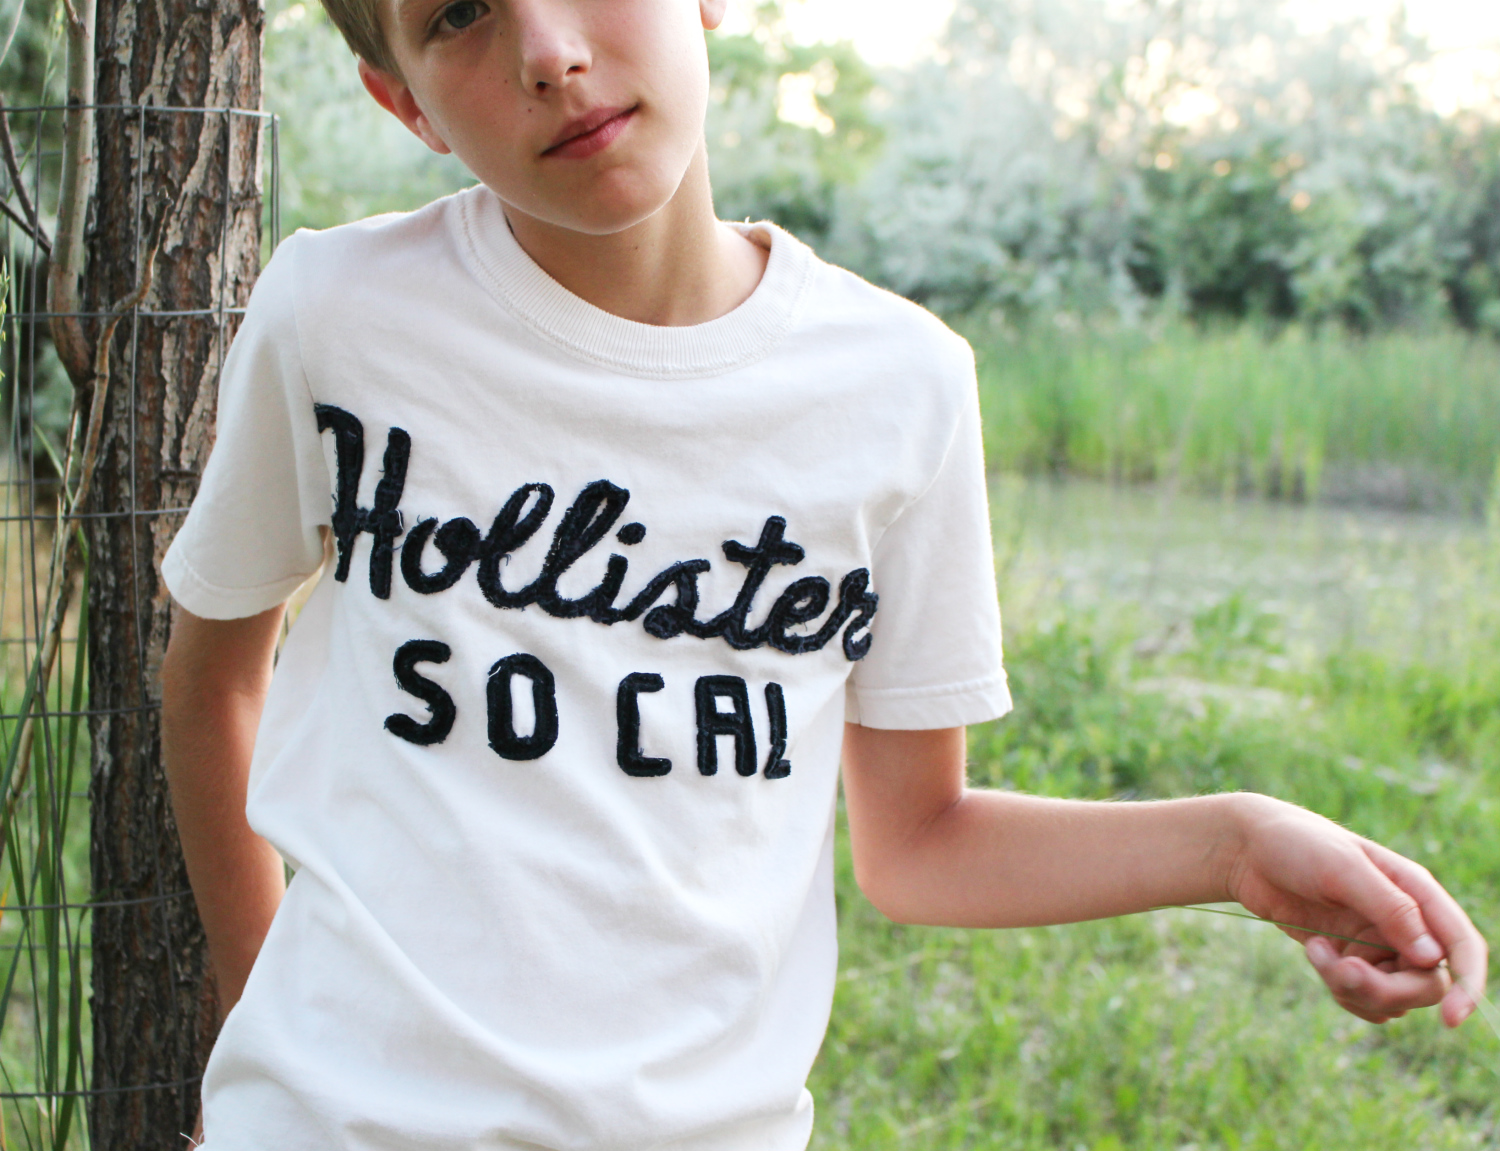 hollister shirts for kids